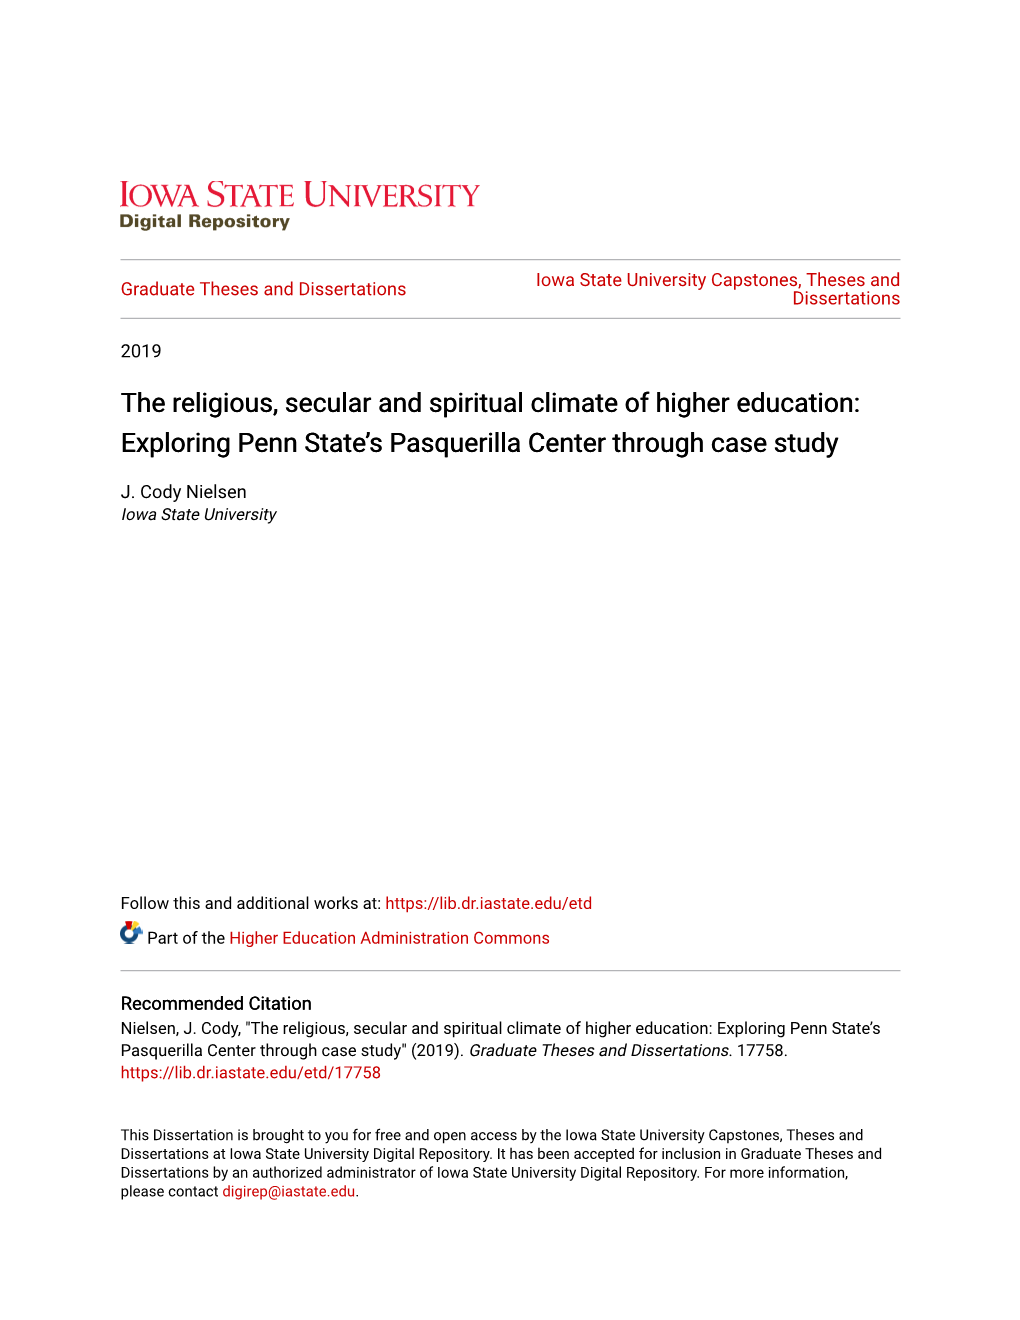 The Religious, Secular and Spiritual Climate of Higher Education: Exploring Penn State’S Pasquerilla Center Through Case Study